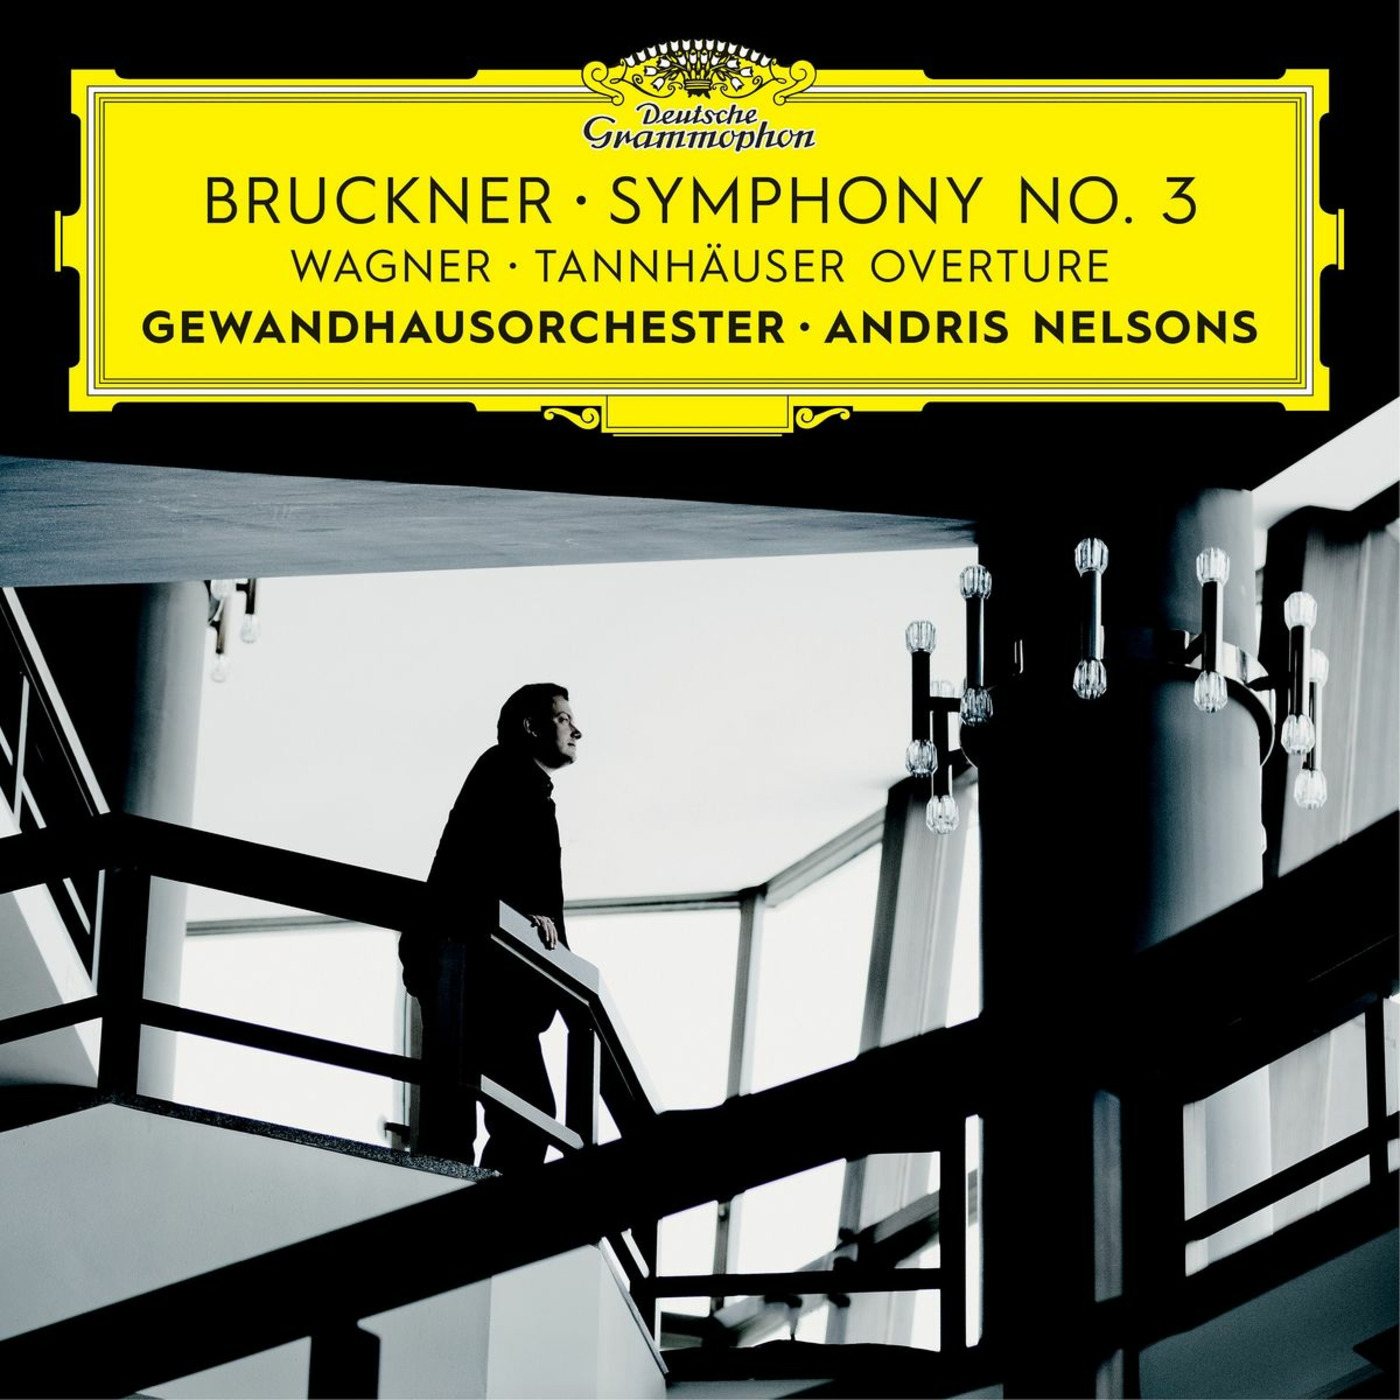 Episode 216: 18216 Bruckner: Symphony No. 3 in D minor, WAB 103